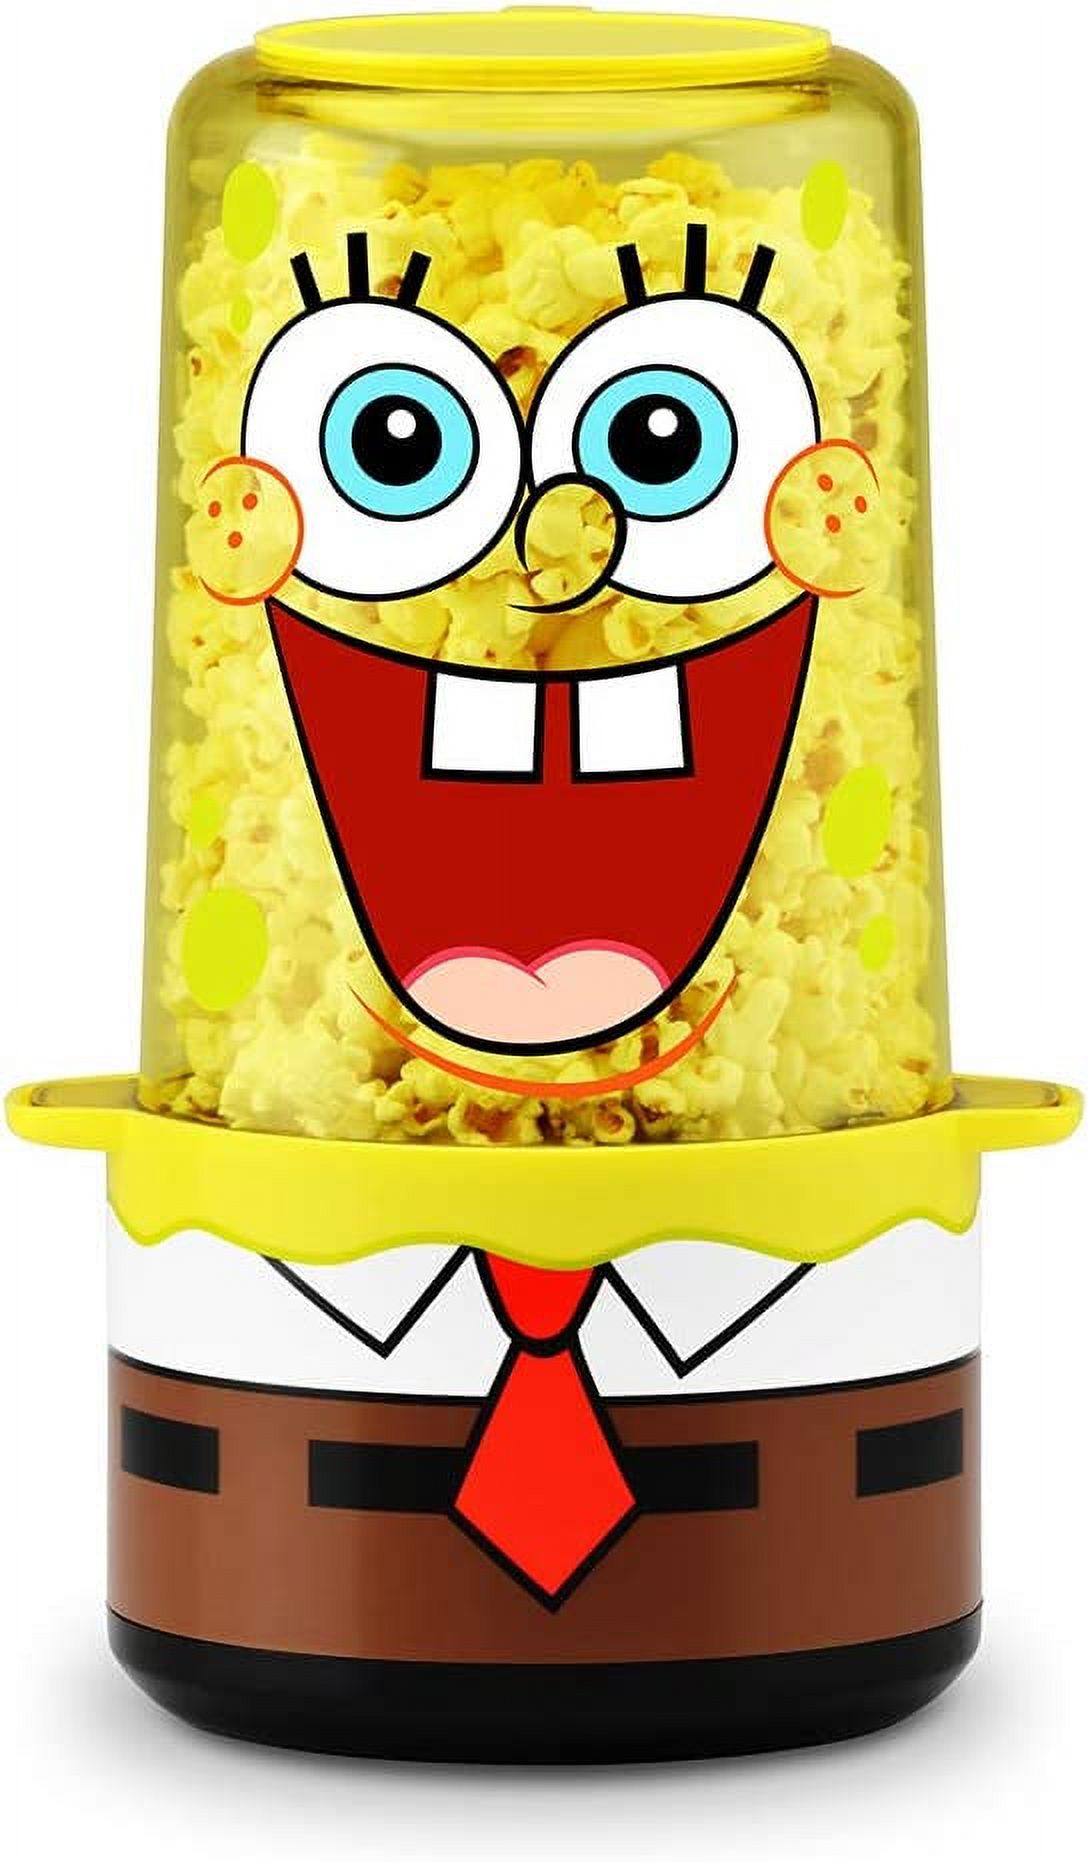 Nickelodeon Spongebob Stir Popcorn Popper, One Size, Yellow - image 1 of 3